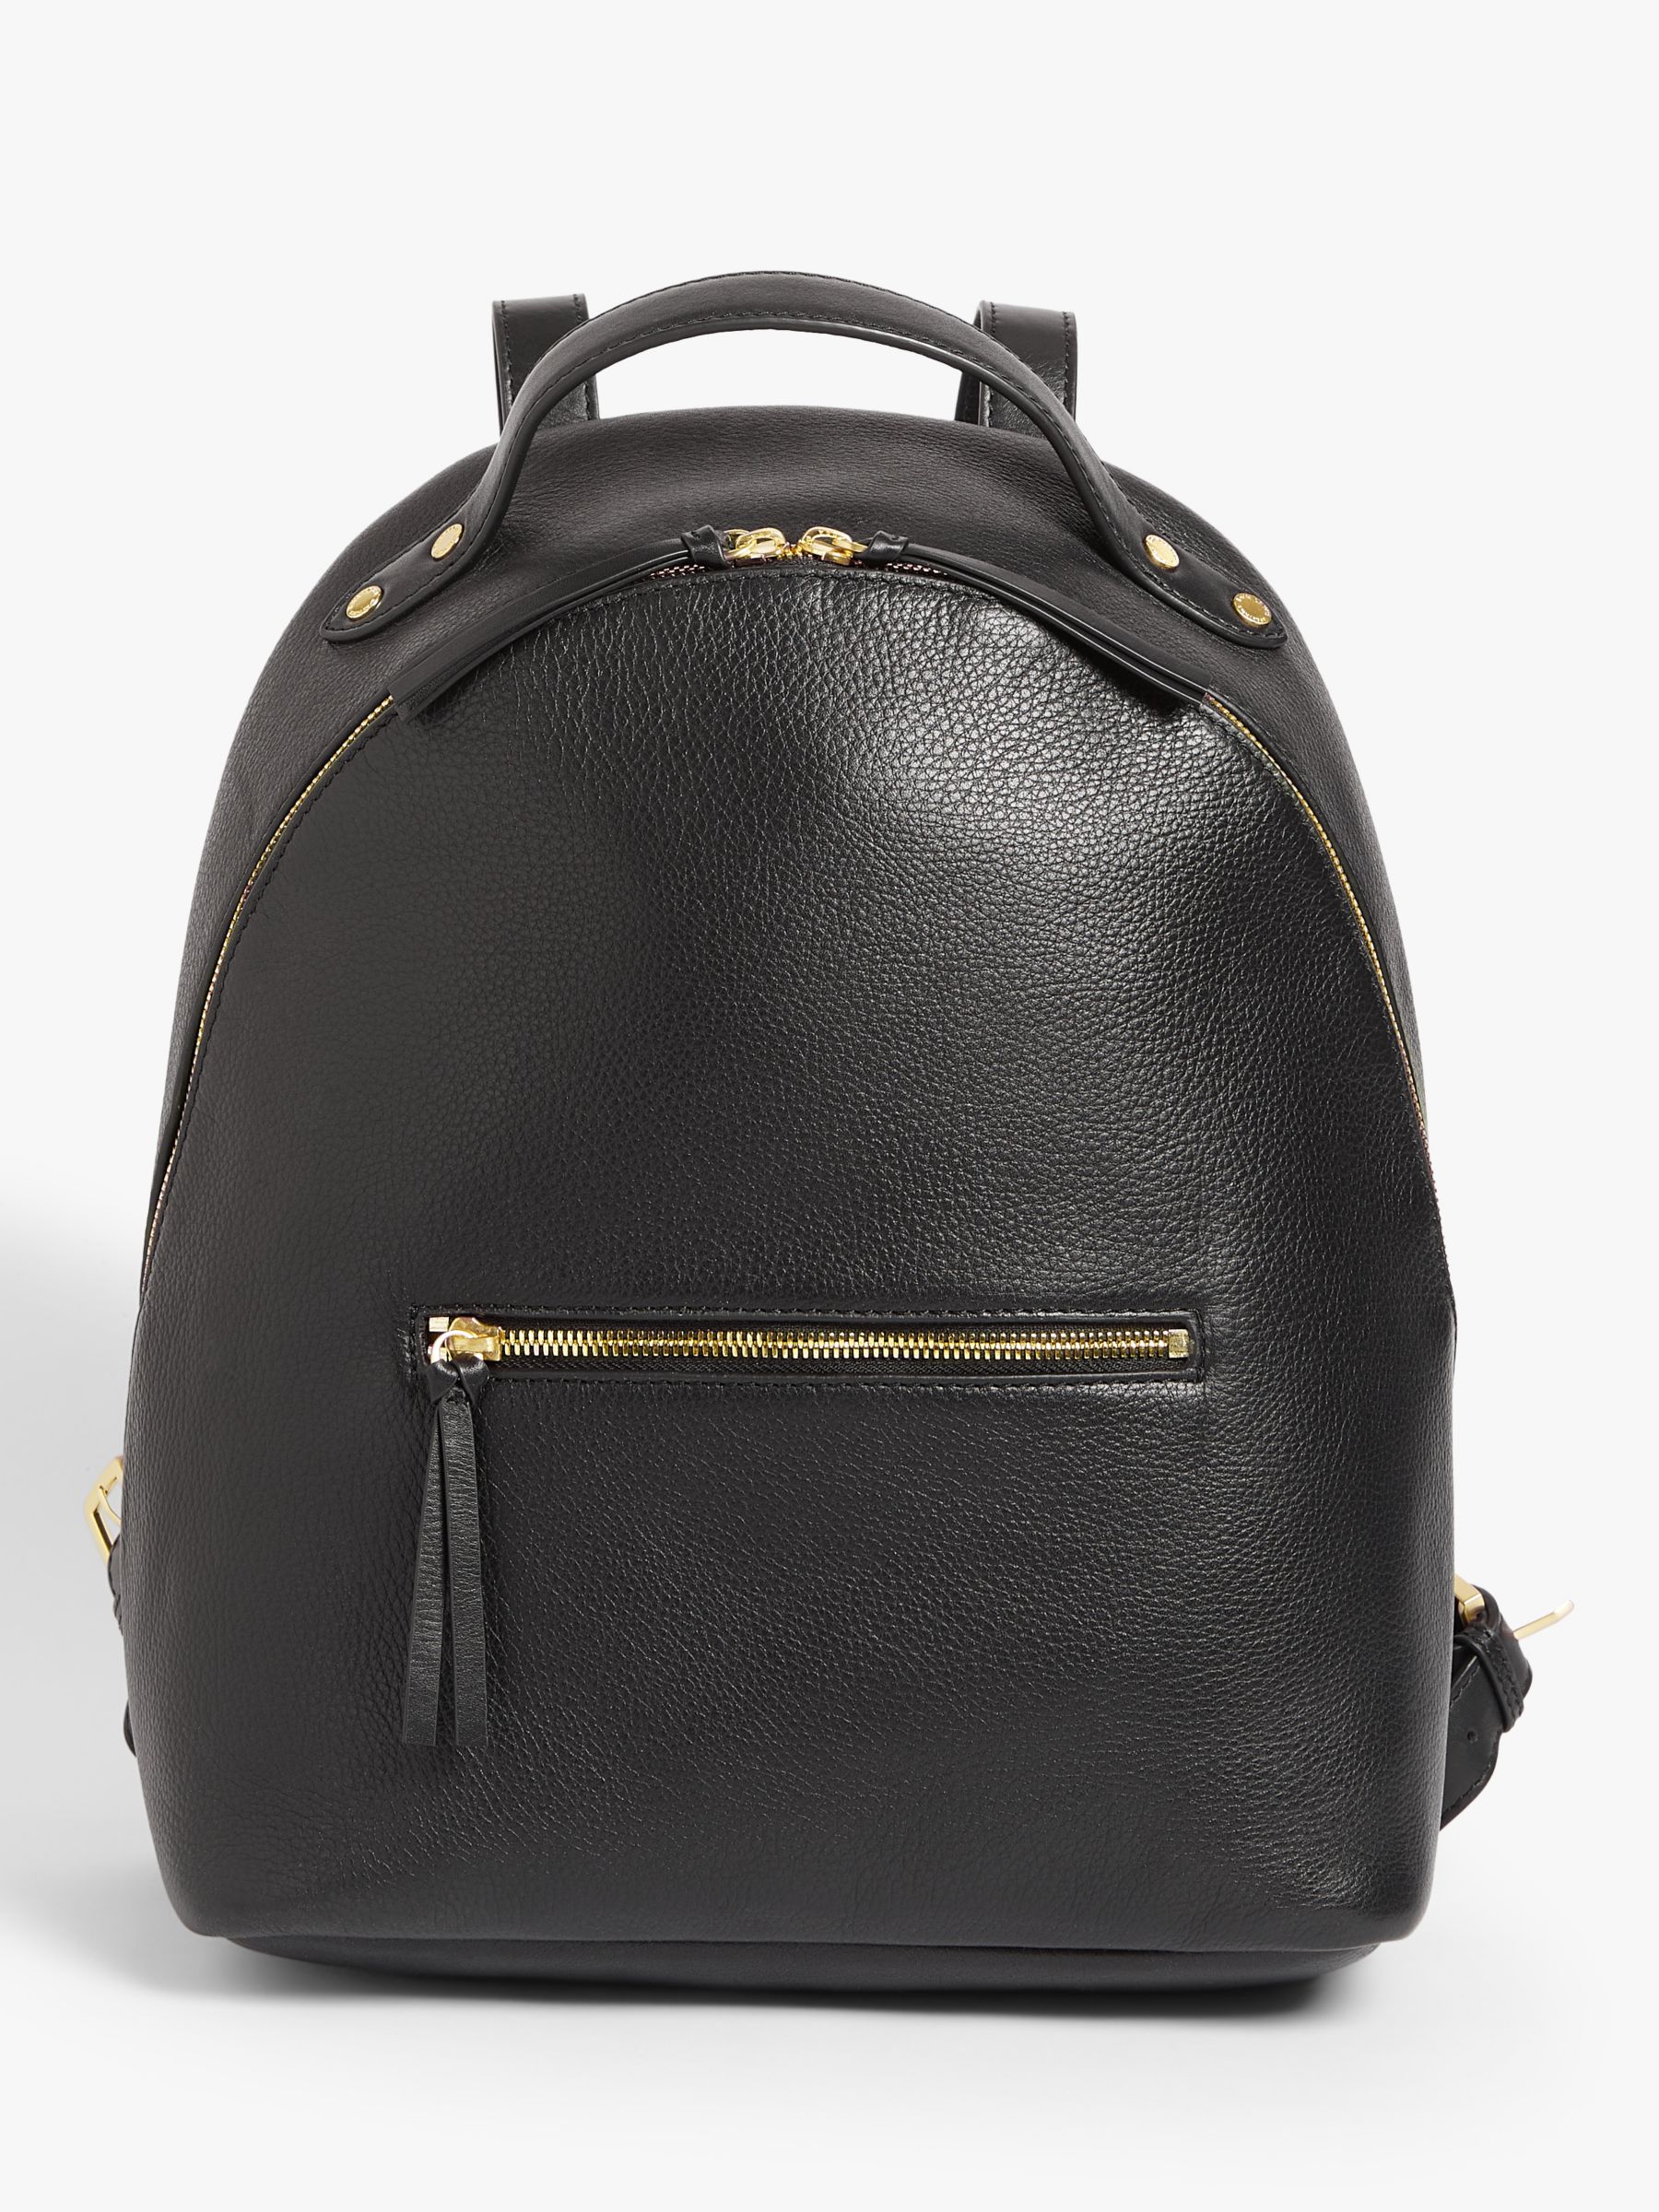 John Lewis & Partners Harper Leather Backpack